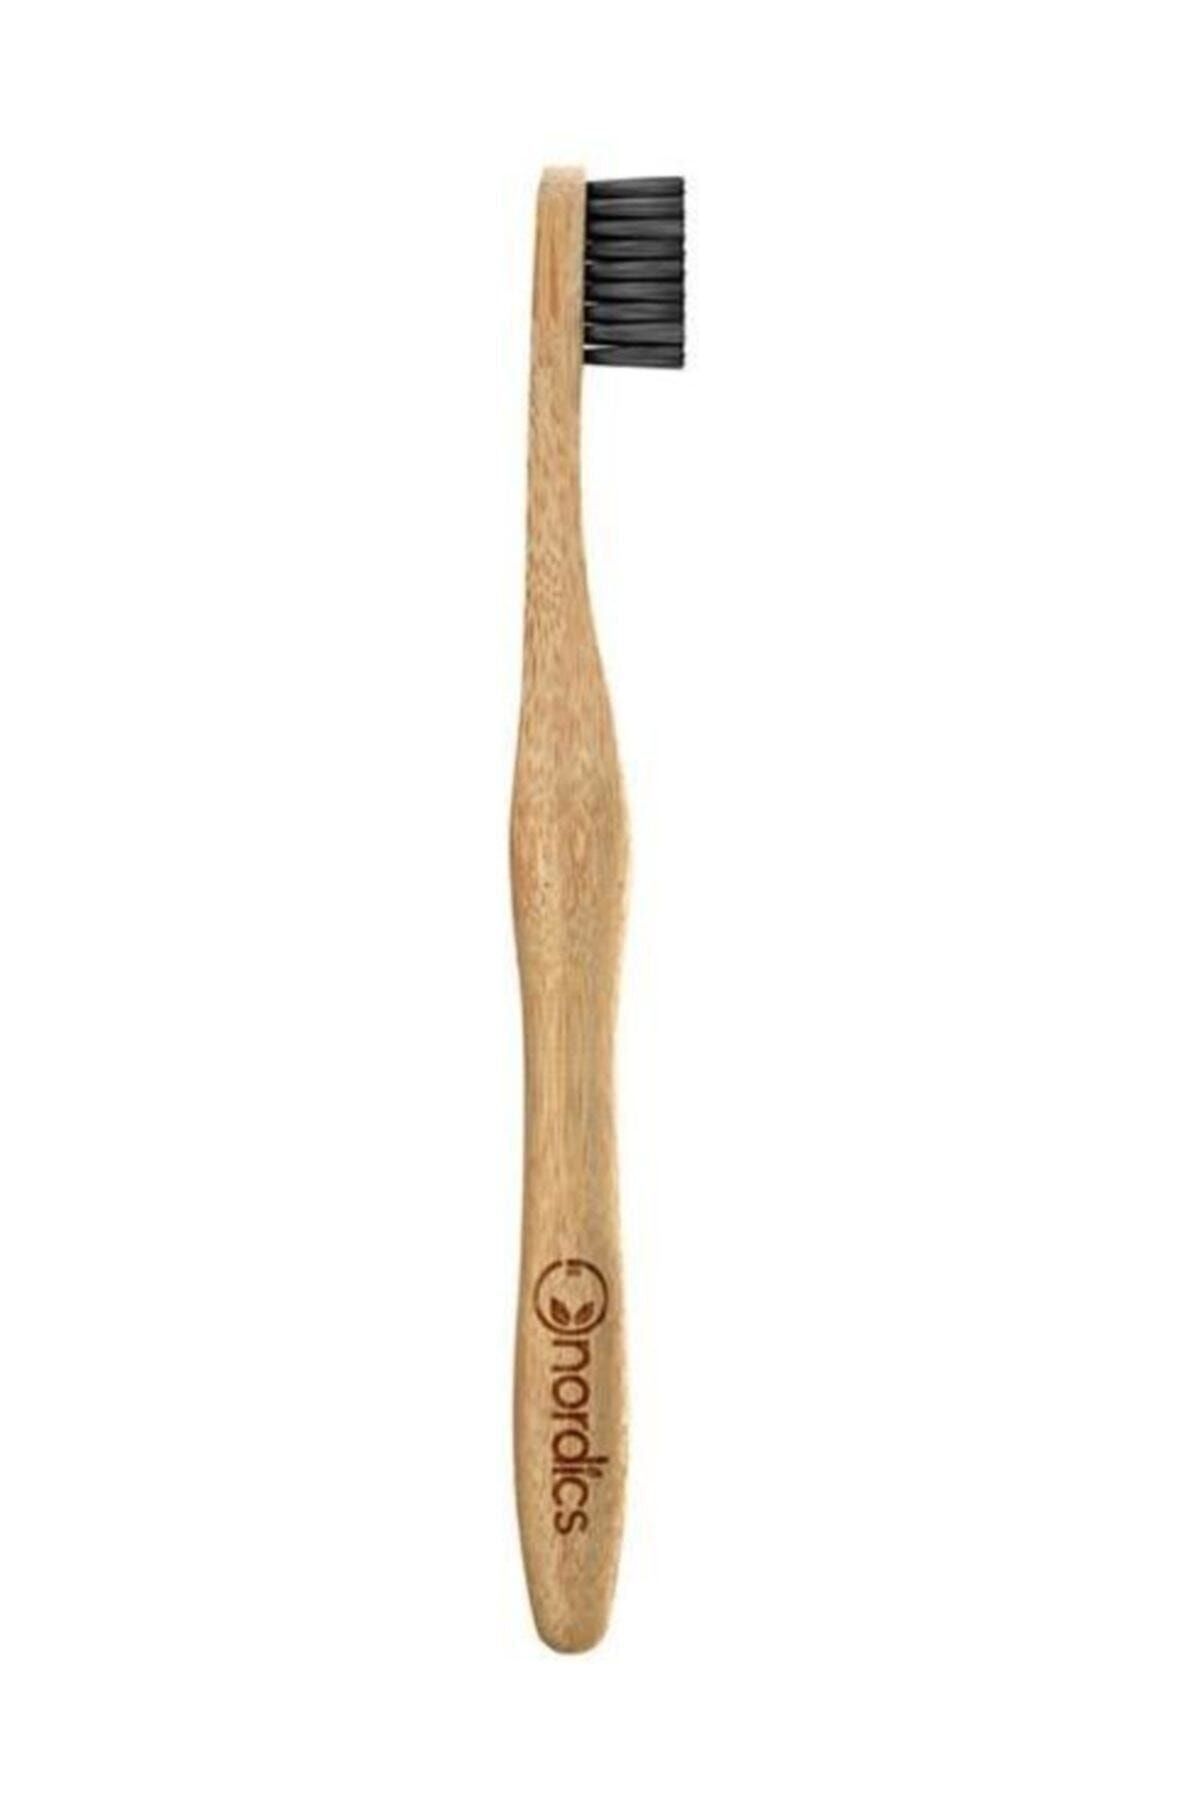 Nordic Naturals Nordics Bambu Yetişkin Diş Fırçası Siyah